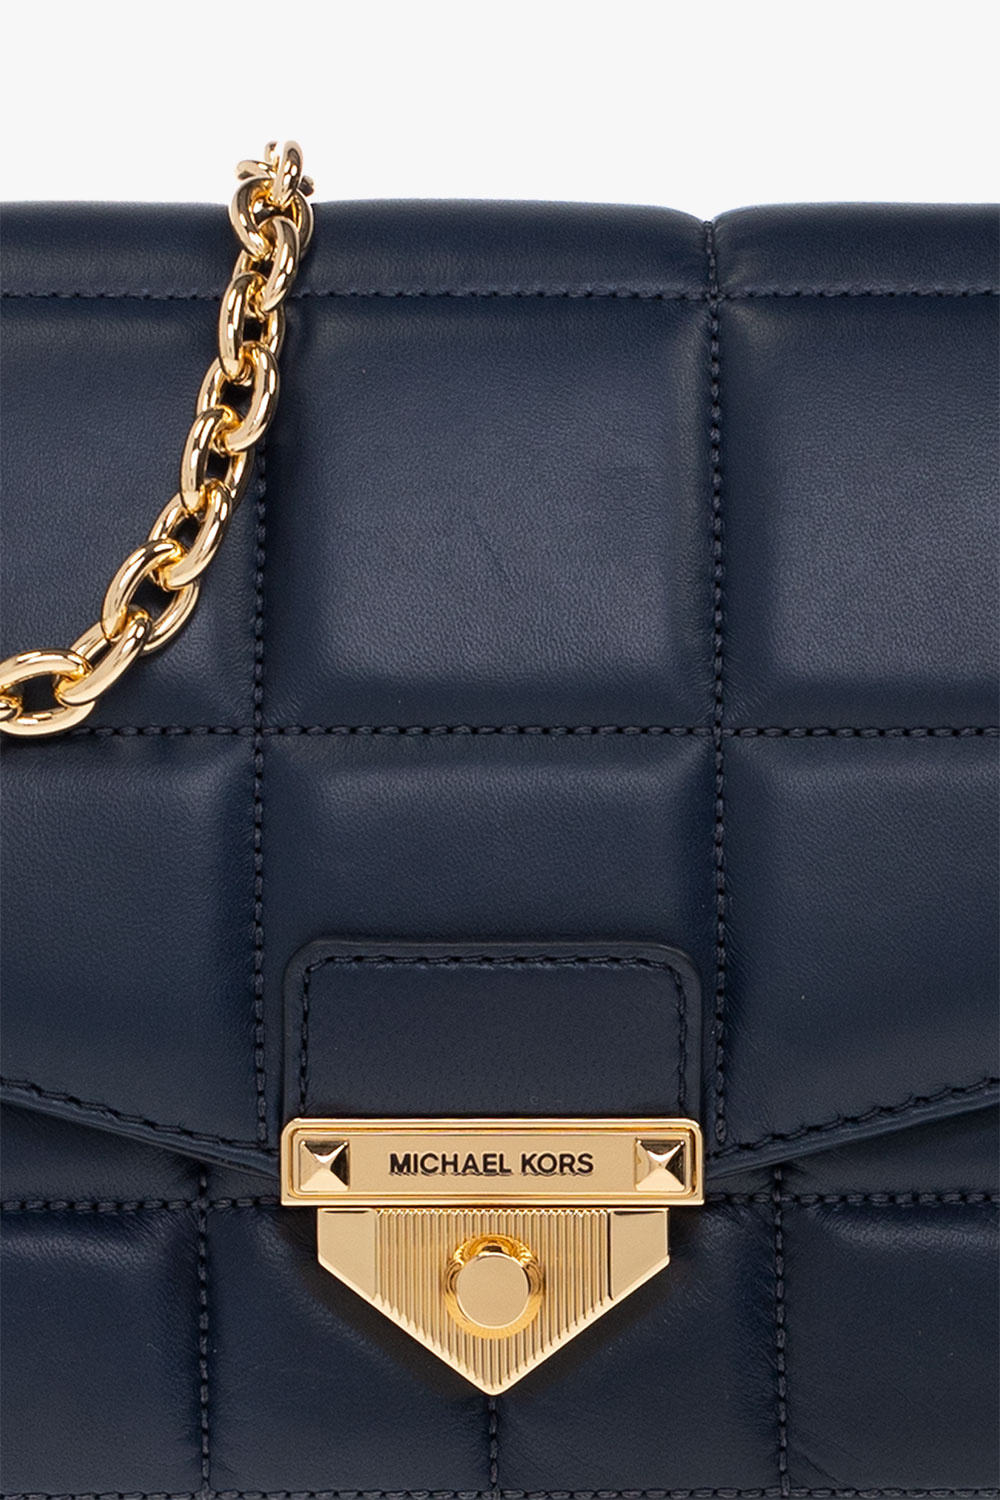 Michael Kors Ladies Soho Large Quilted Leather Shoulder Bag - Pale Blue